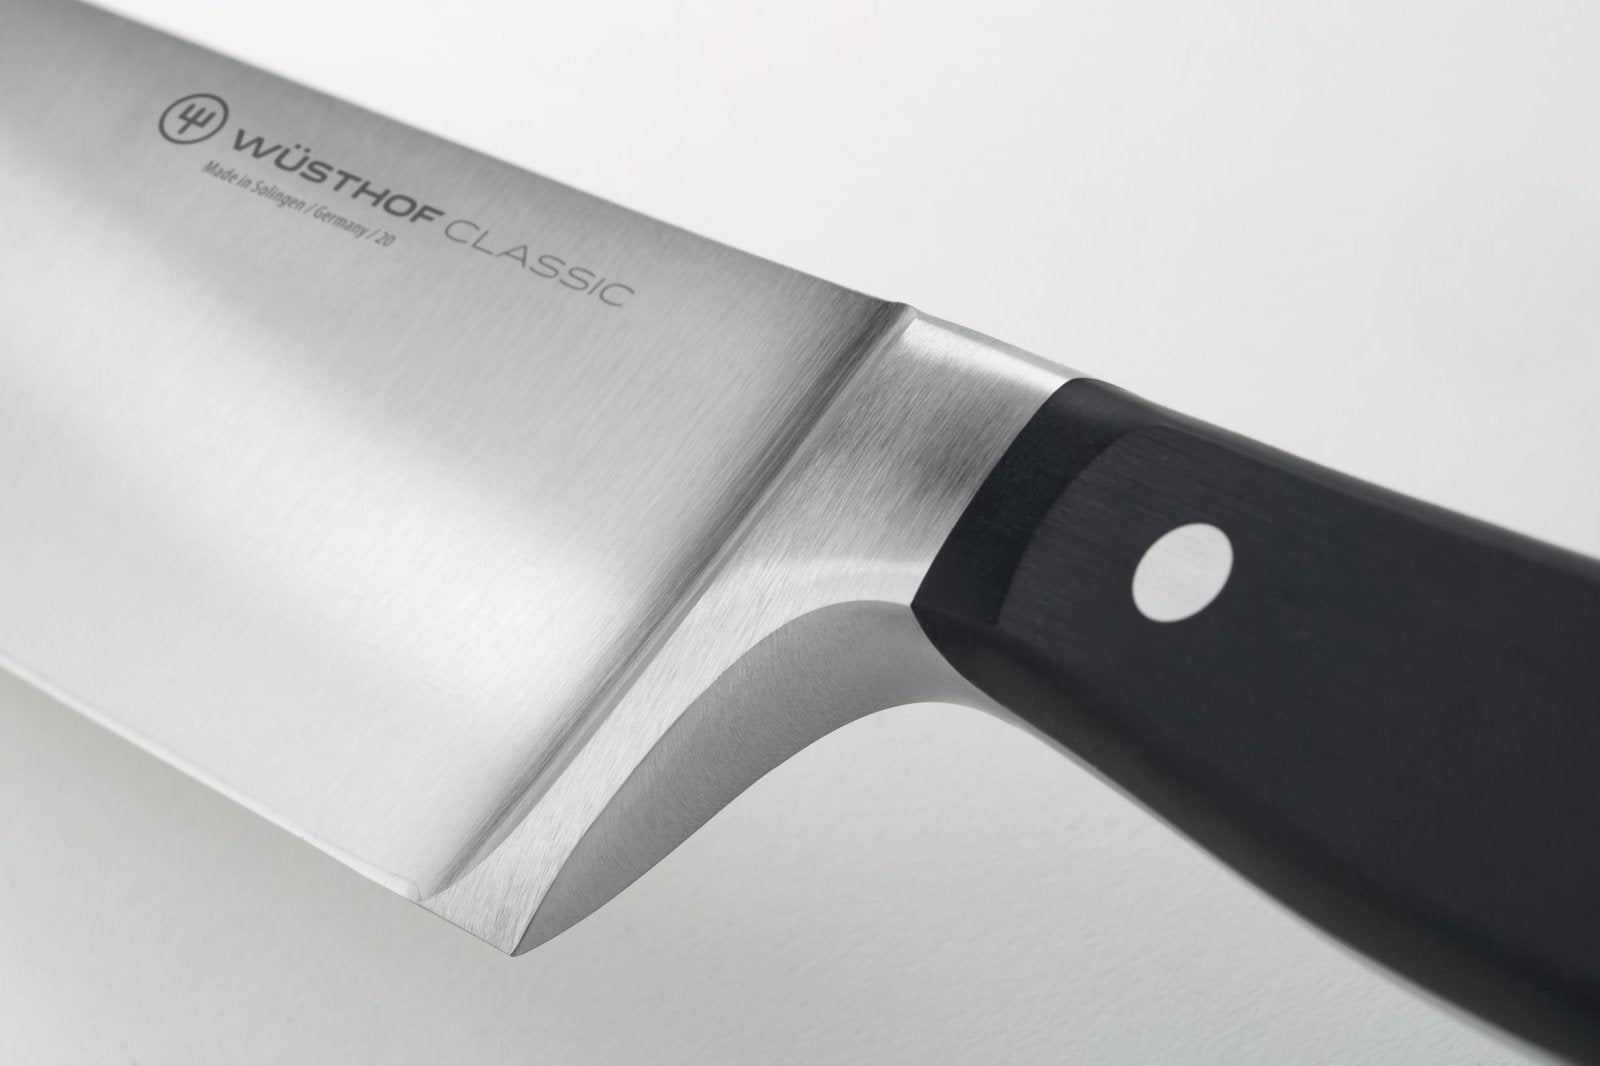 Wusthof Classic Boning Knife 14cm - 1040101414 - The Cotswold Knife Company